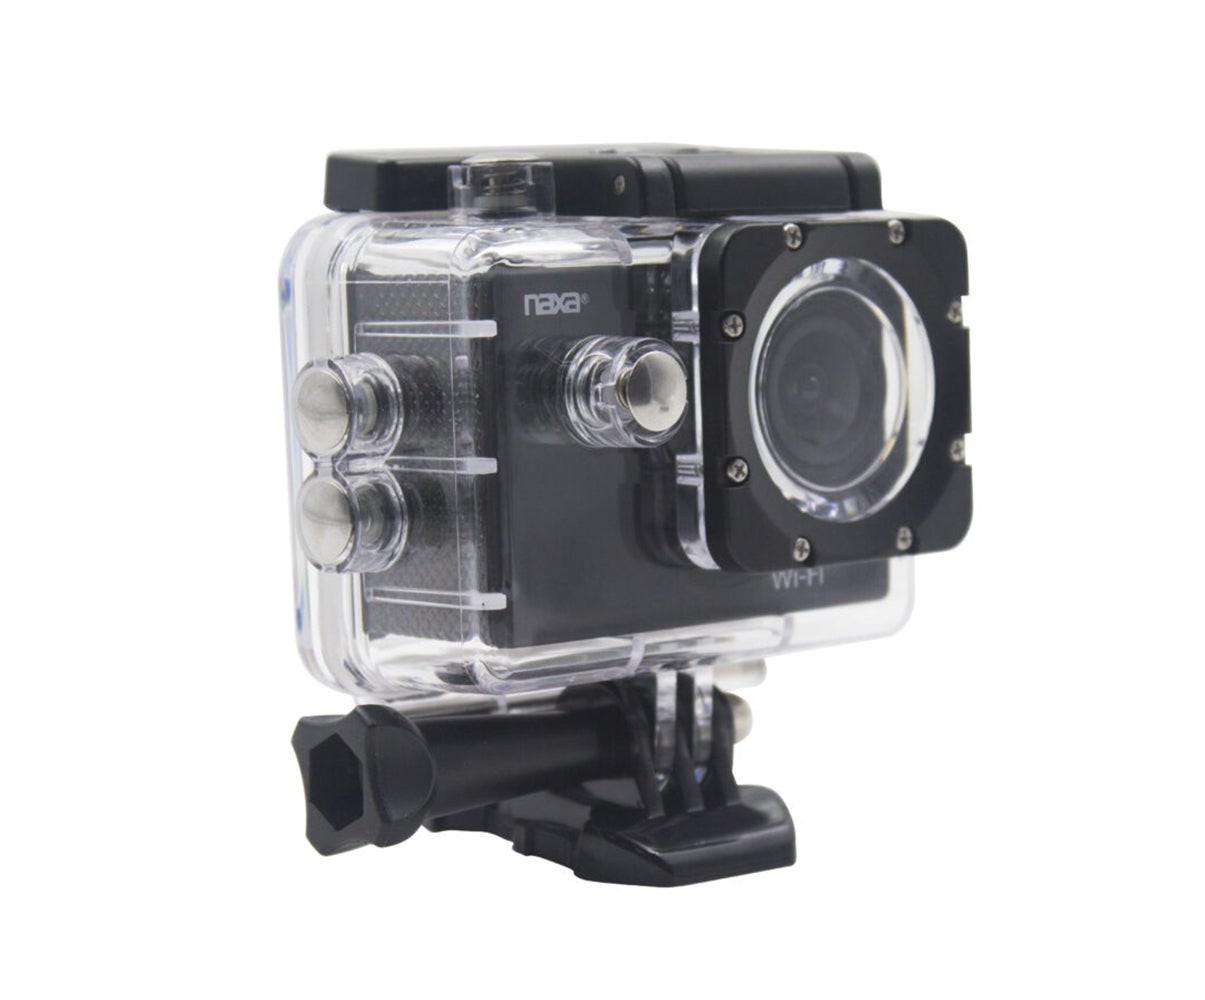 Waterproof 1080p FHD Action Camera